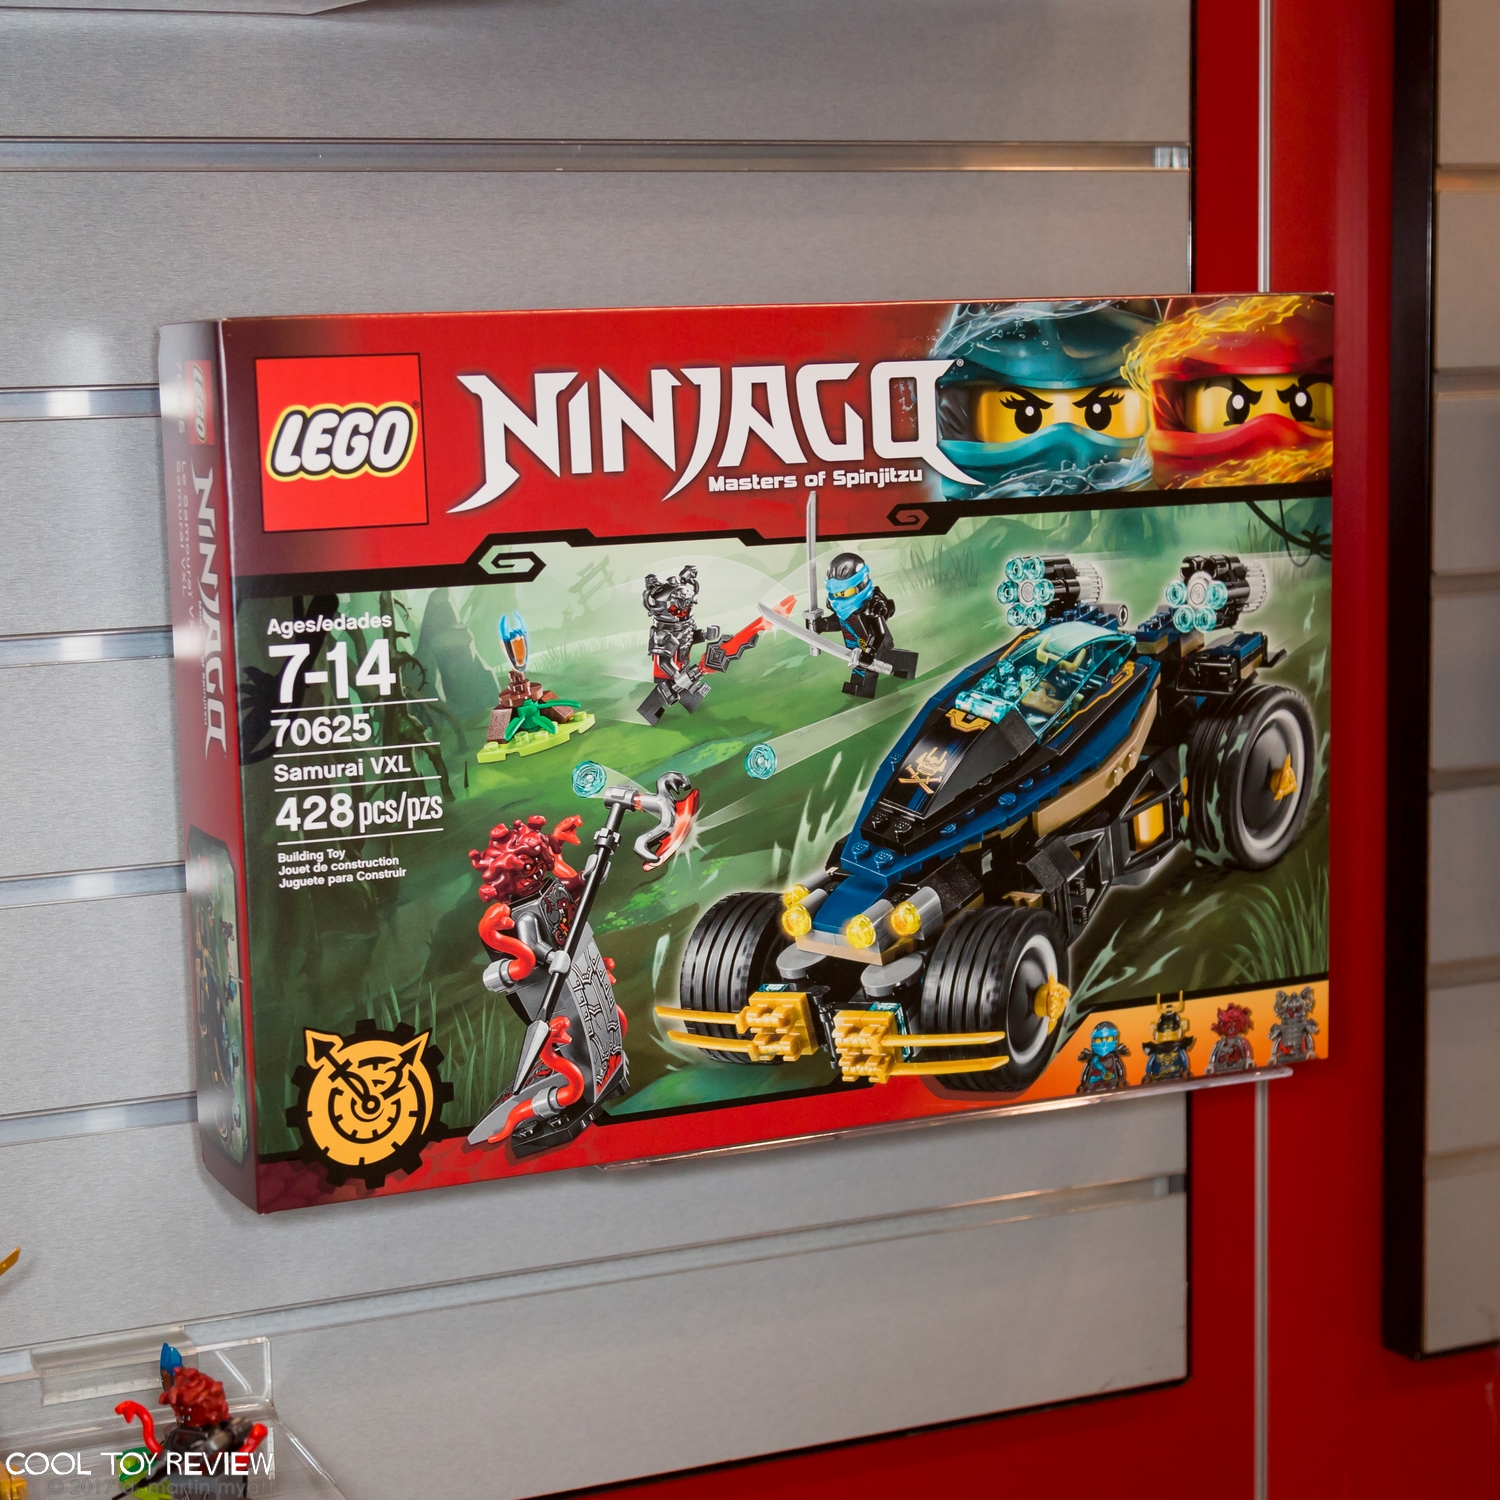 LEGO-2017-International-Toy-Fair-Ninjago-020.jpg